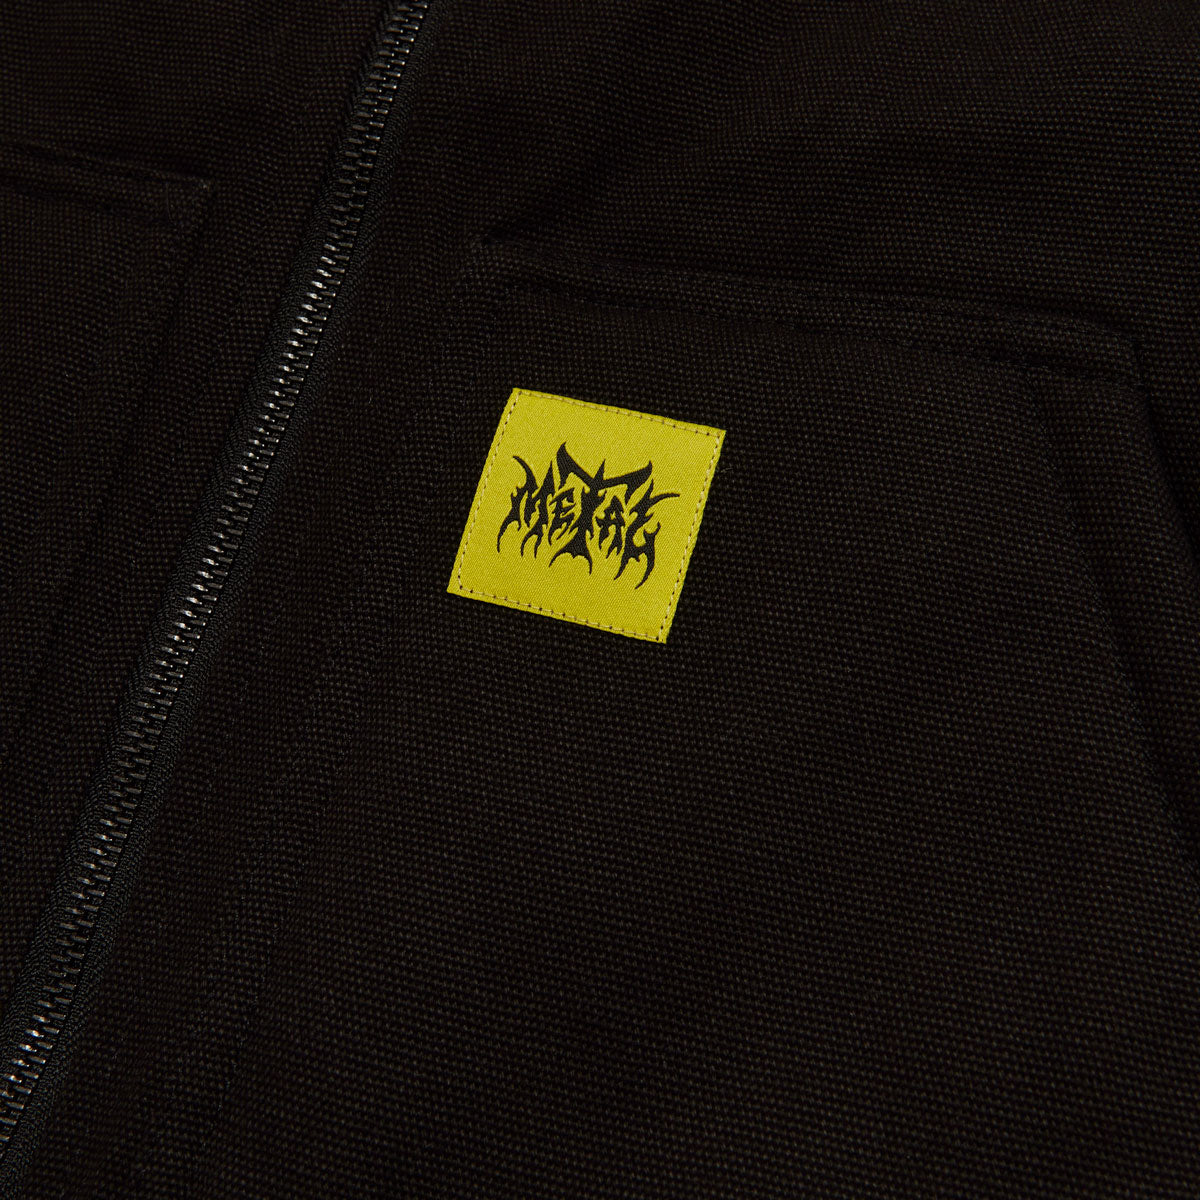 Metal Trust in Crust Vest Jacket - Black image 4